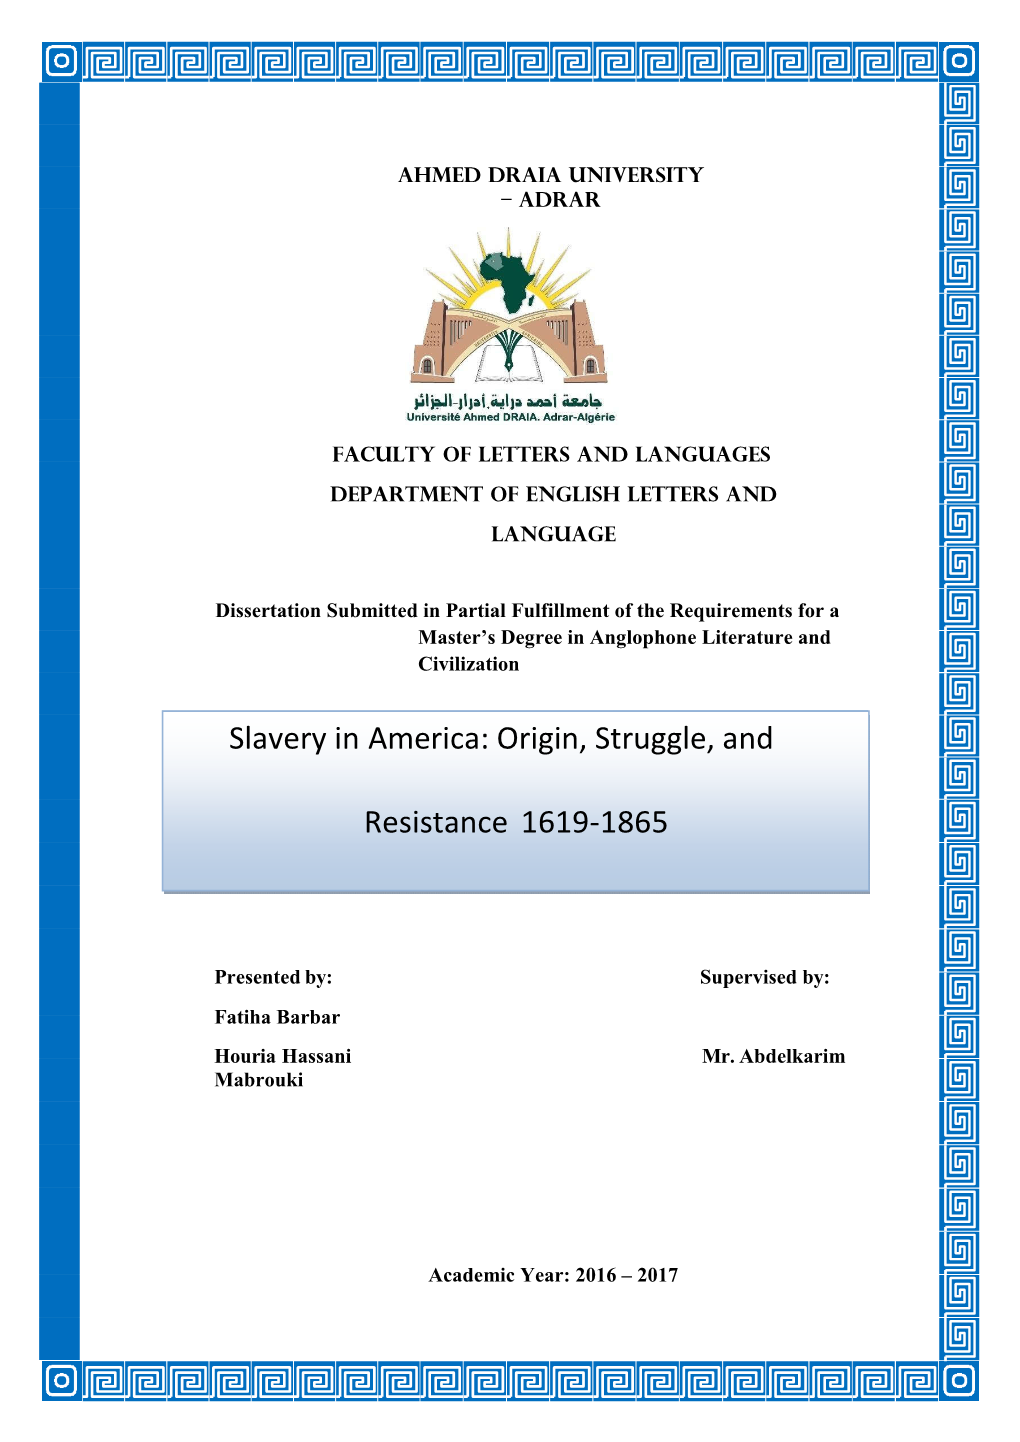 Slavery in America: Origin, Struggle, and Resistance 1619-1865